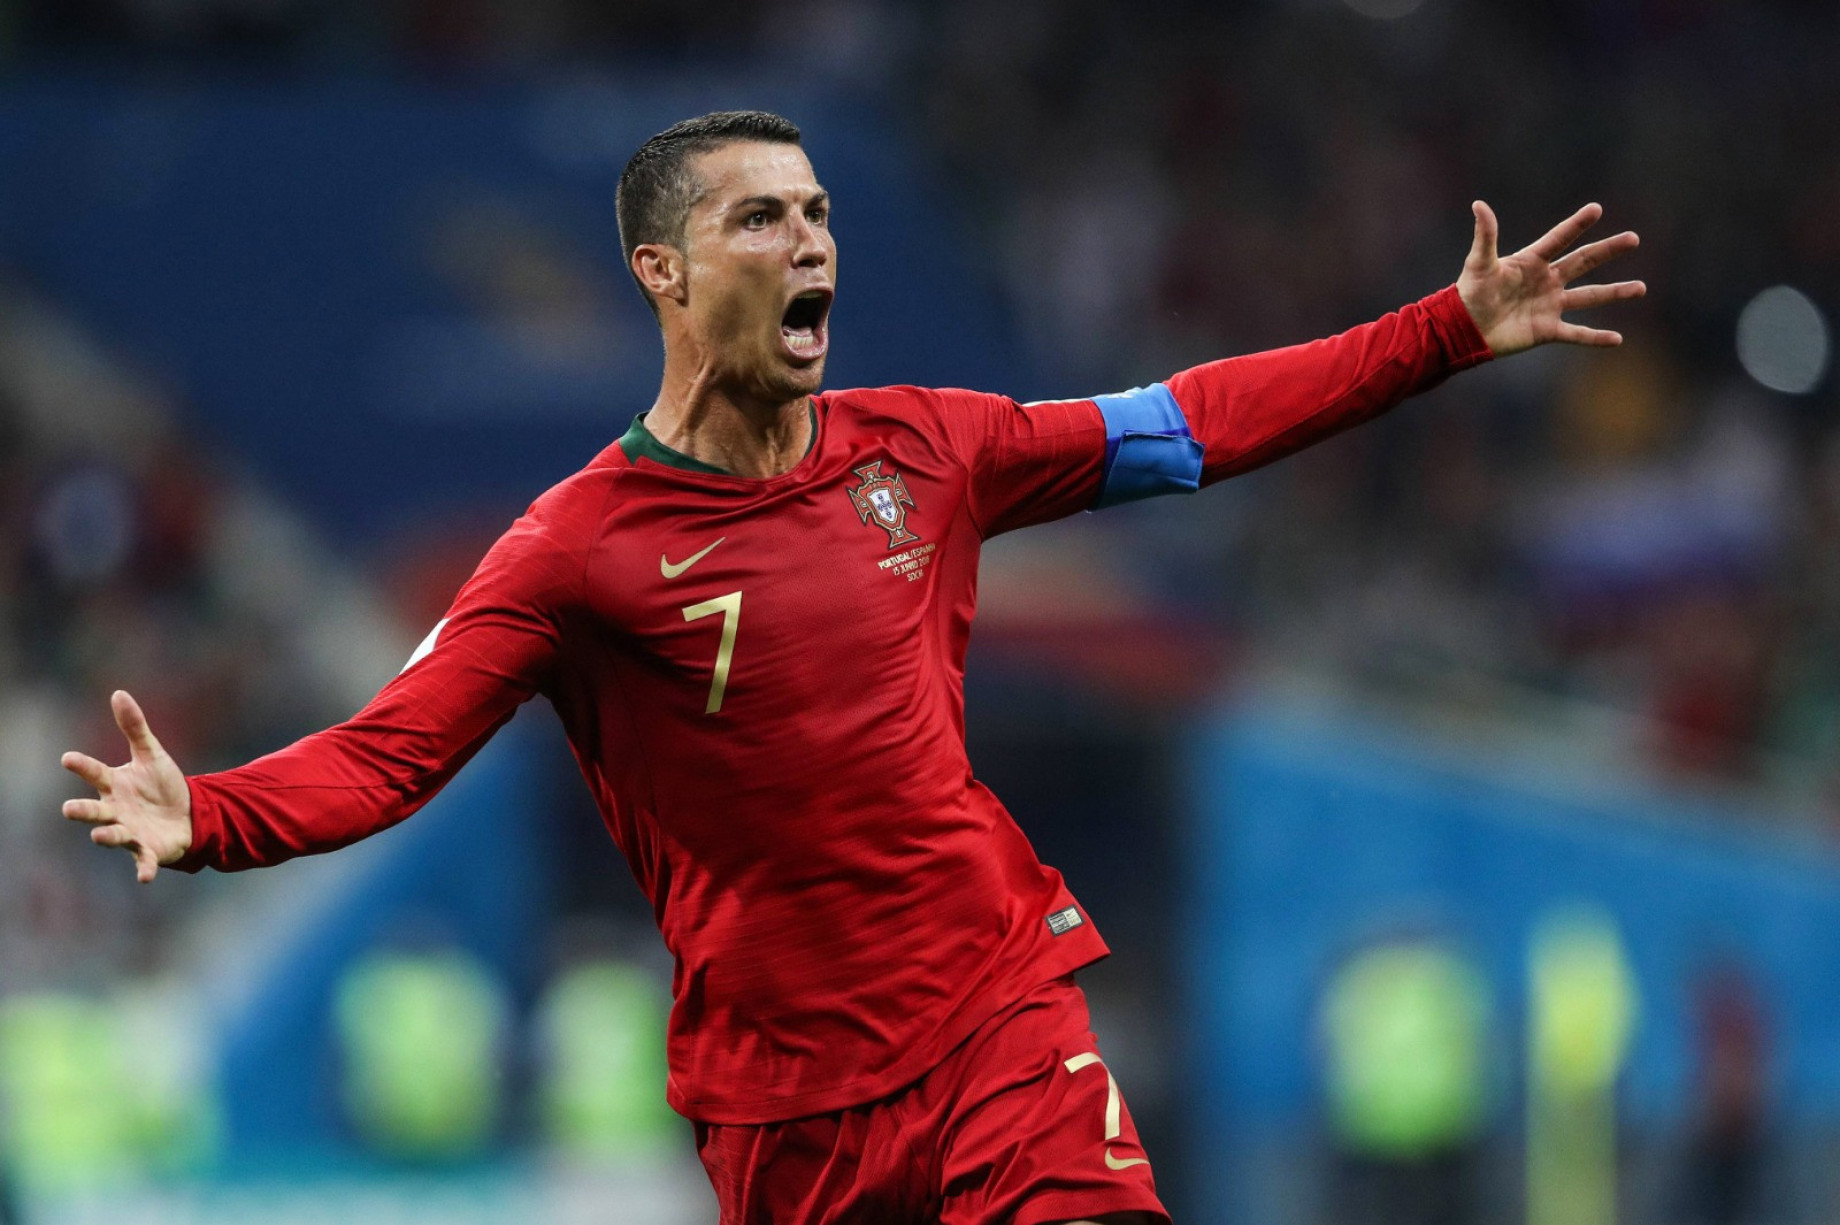 Ronaldo Portogallo IMAGE.jpeg